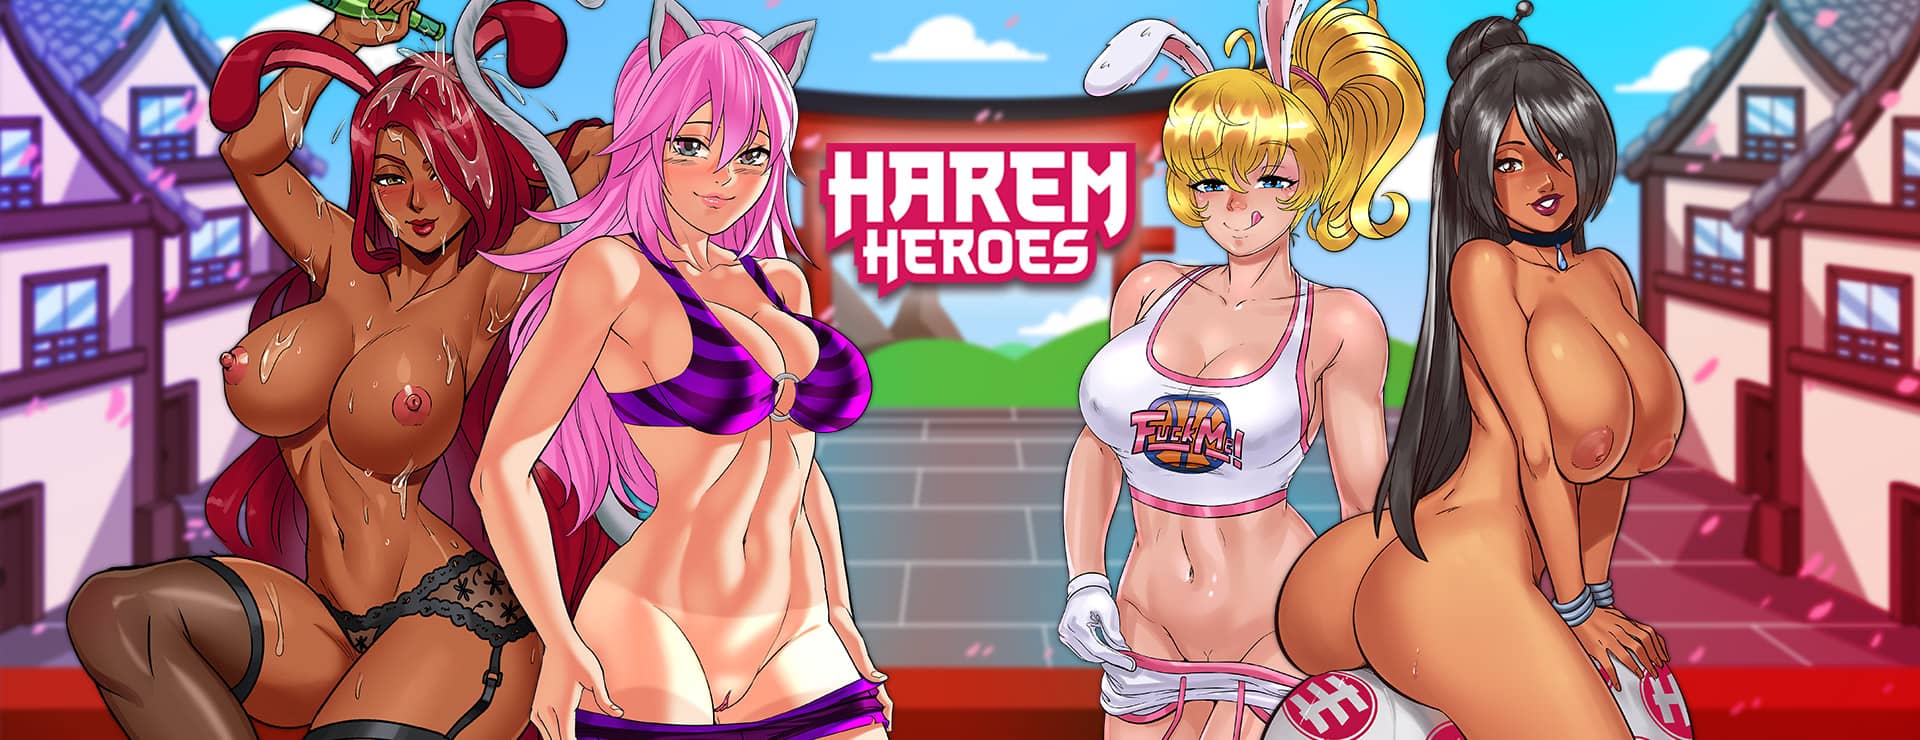 Harem Heroes - Action Aventure Jeu